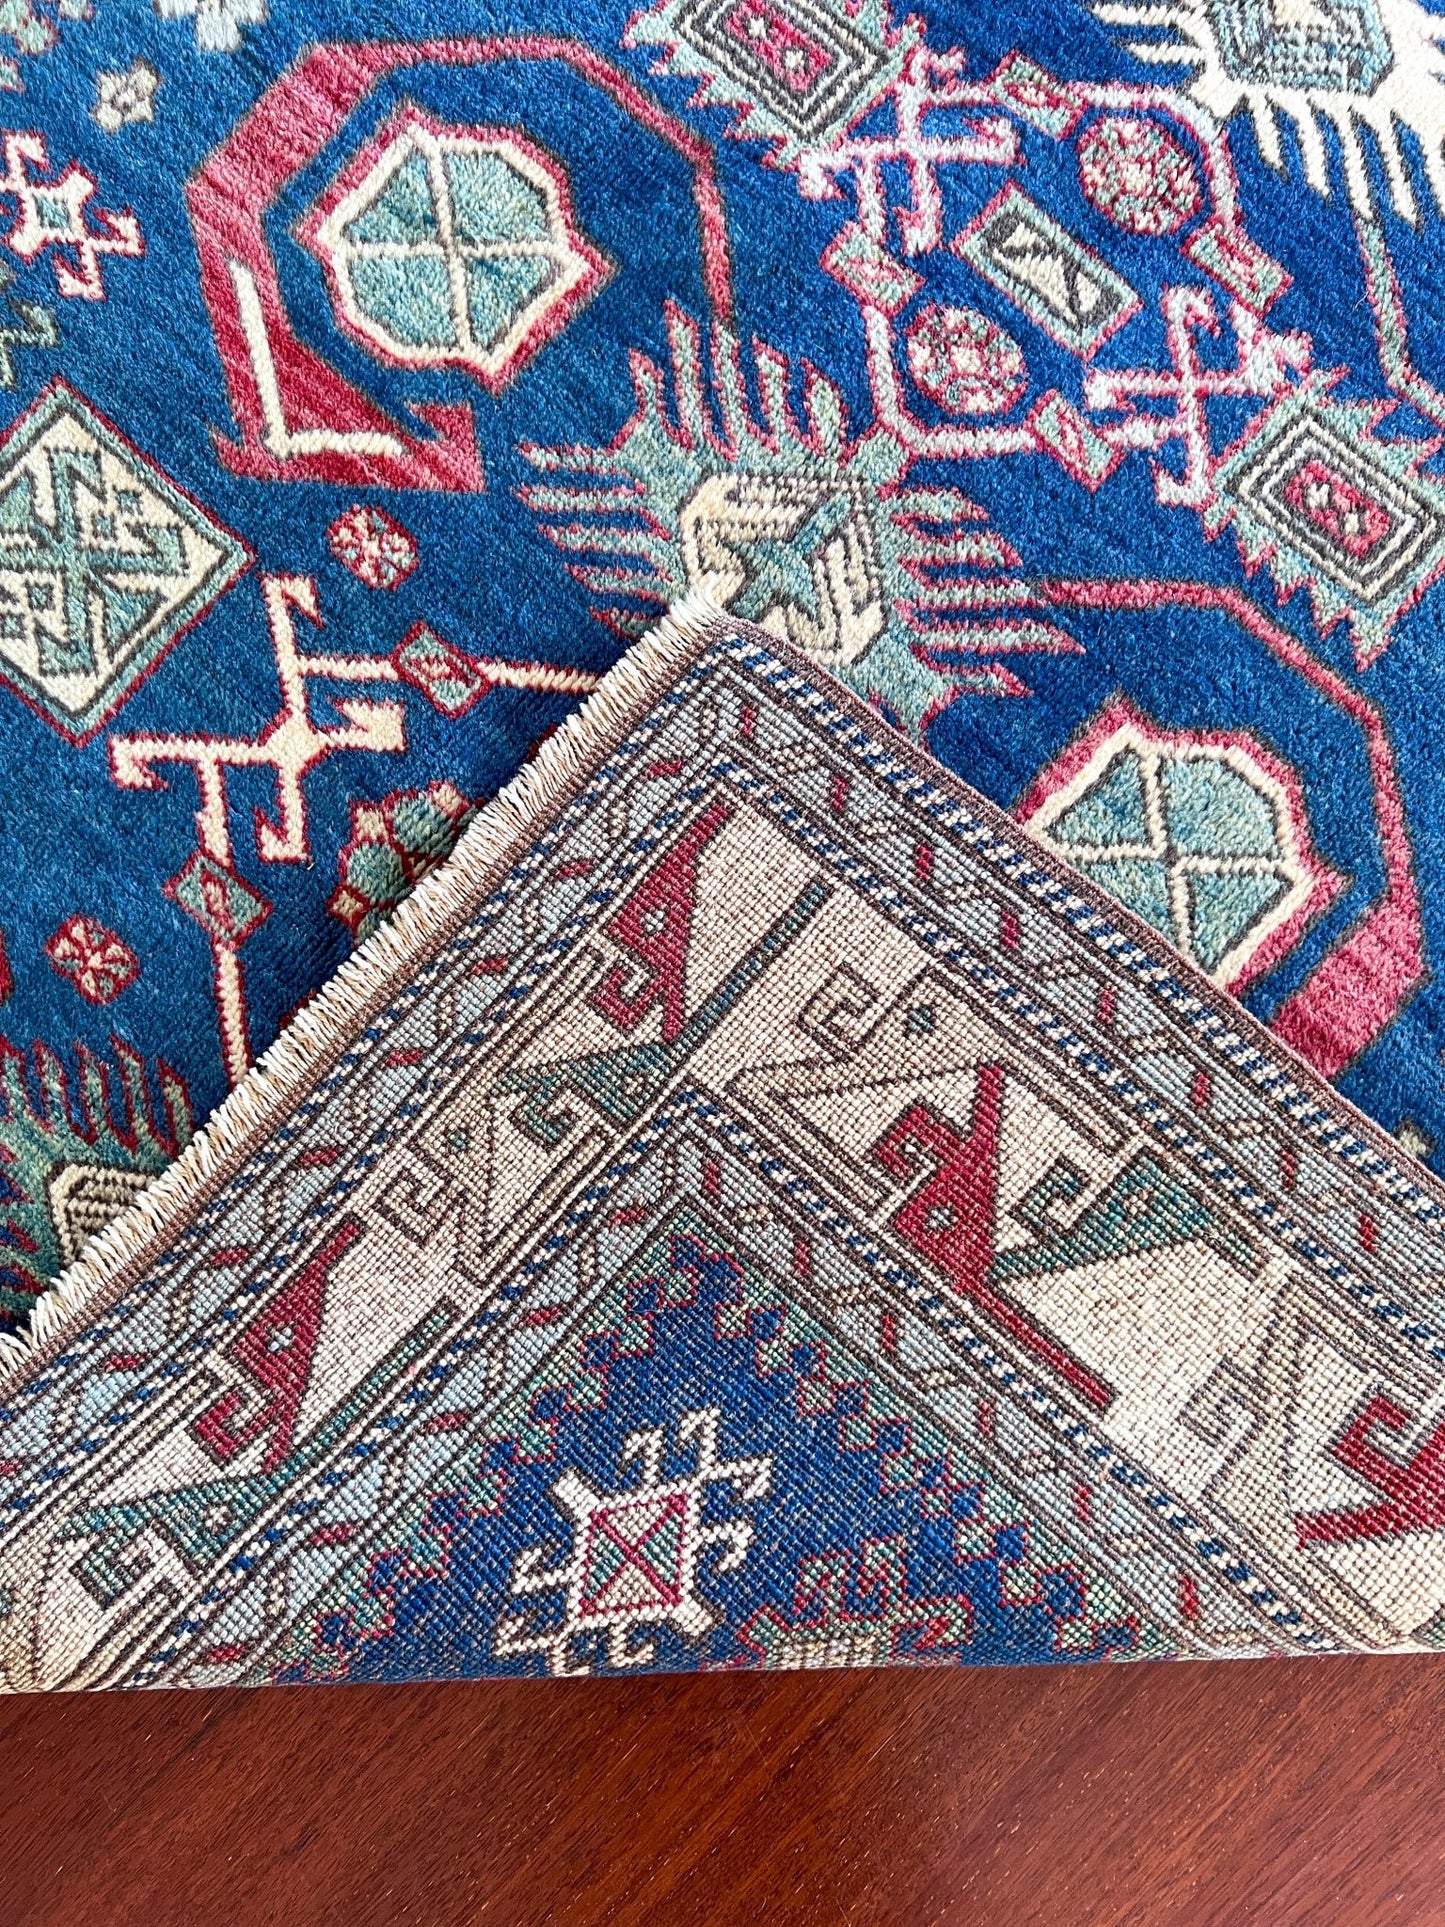 kars blue vintage turkish rug san francisco bay area oriental rug shop palo alto berkeley blue turkish rug shopping